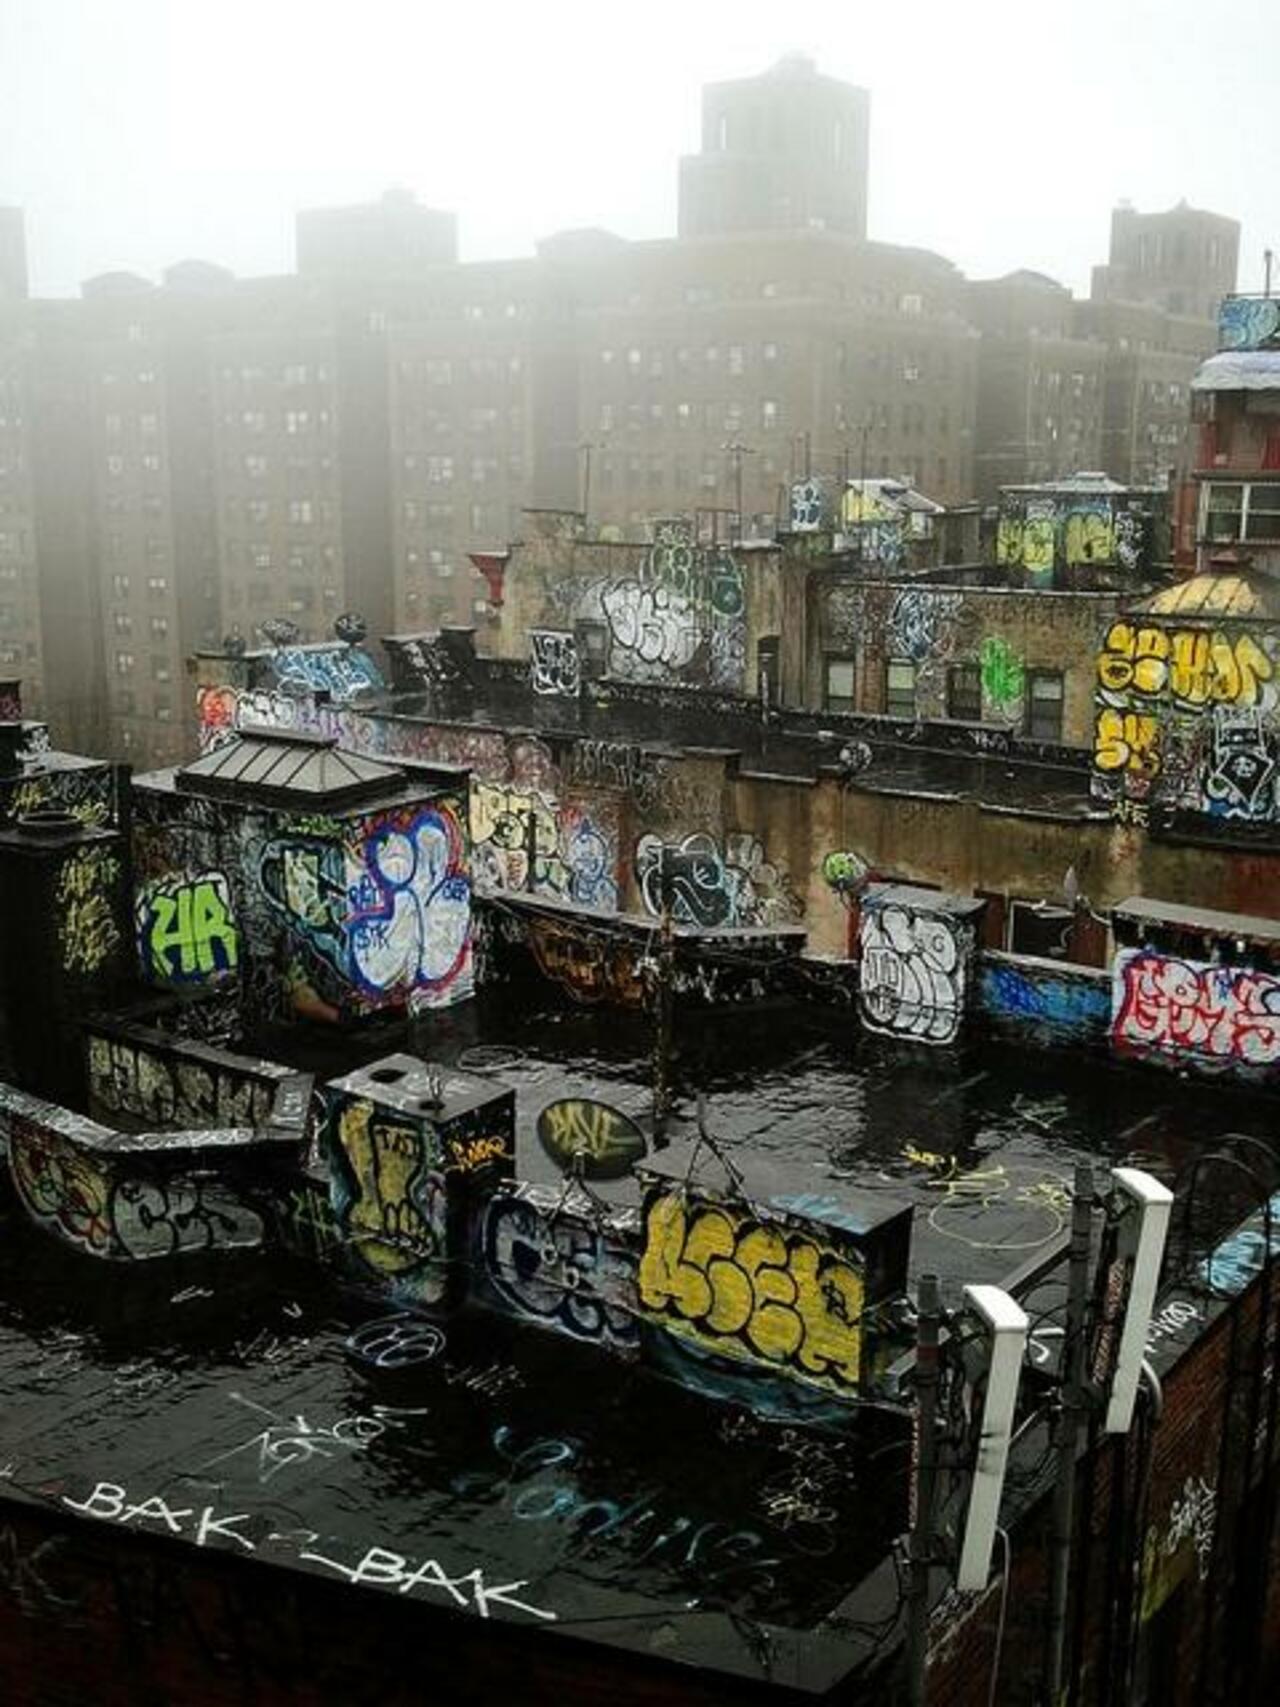 #CHINA #TOWN #NYC #streetart #paint #art #photo #urban #graffiti #world #banksy http://t.co/JAlQHIDeEP